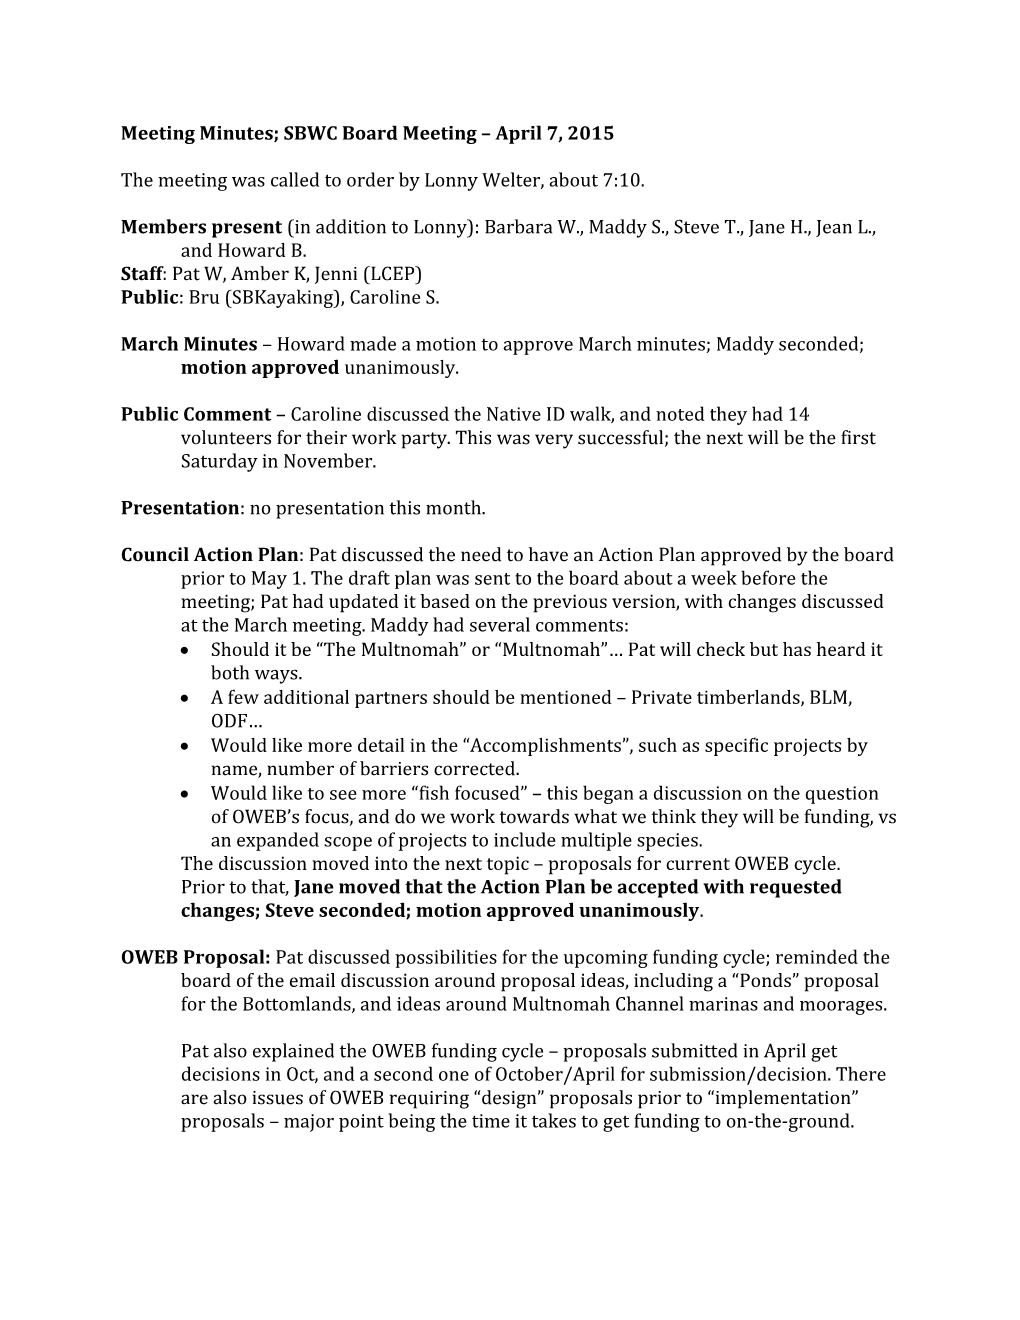 Meeting Minutes; SBWC Board Meeting April 7, 2015